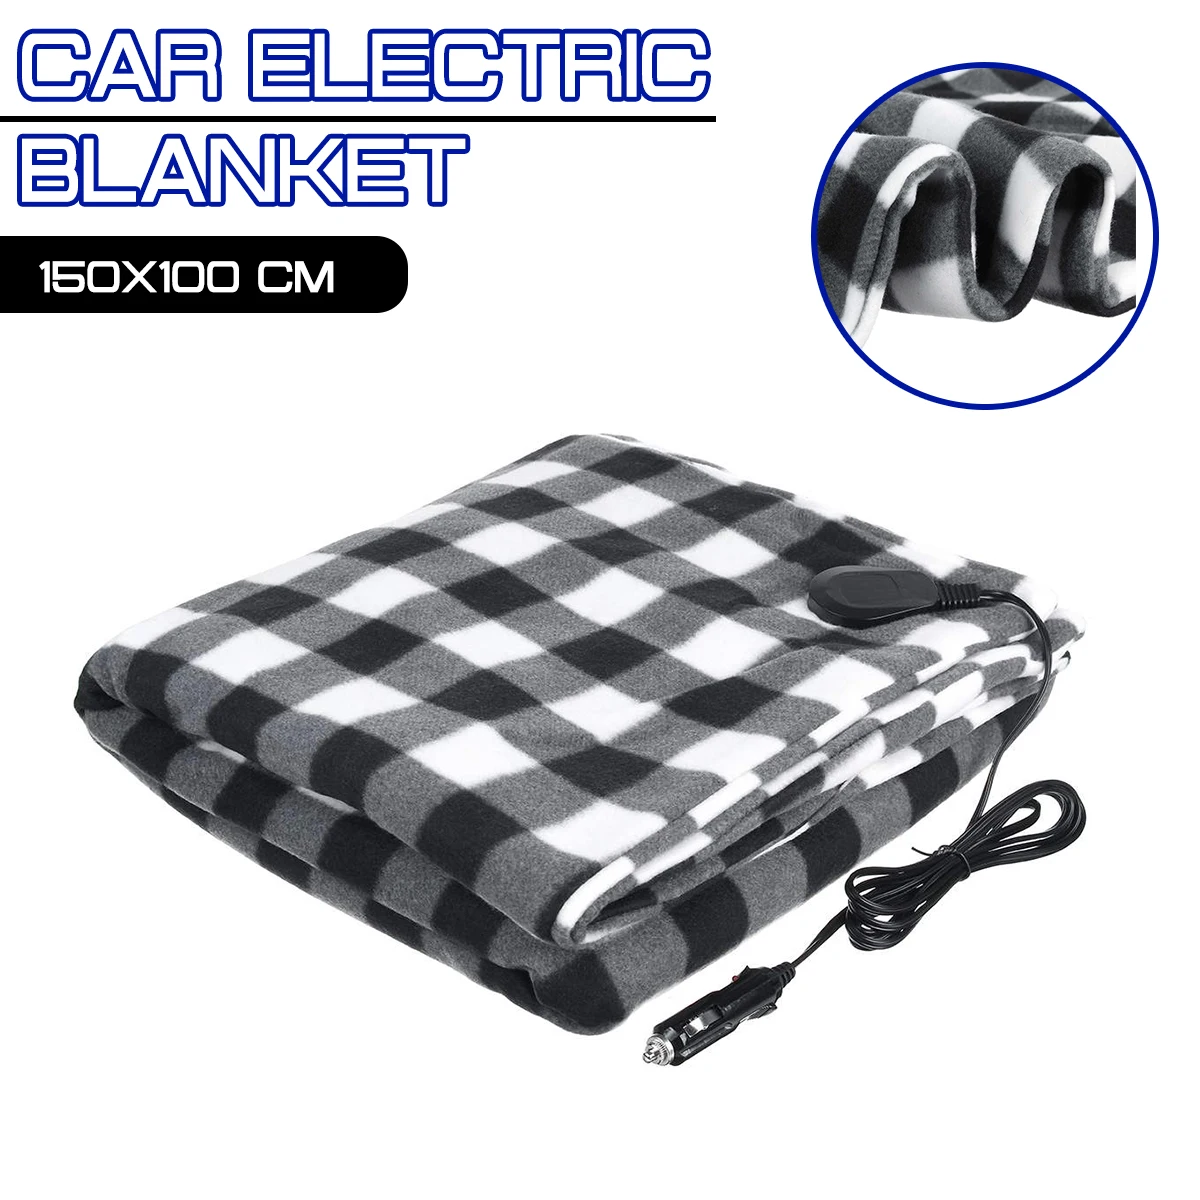 

12V 150x100 Cm Car Electric Blanket Seat Cover Car Heating Blanket Energy Saving Warm Electric Heating Blanket Carpet Heated Mat